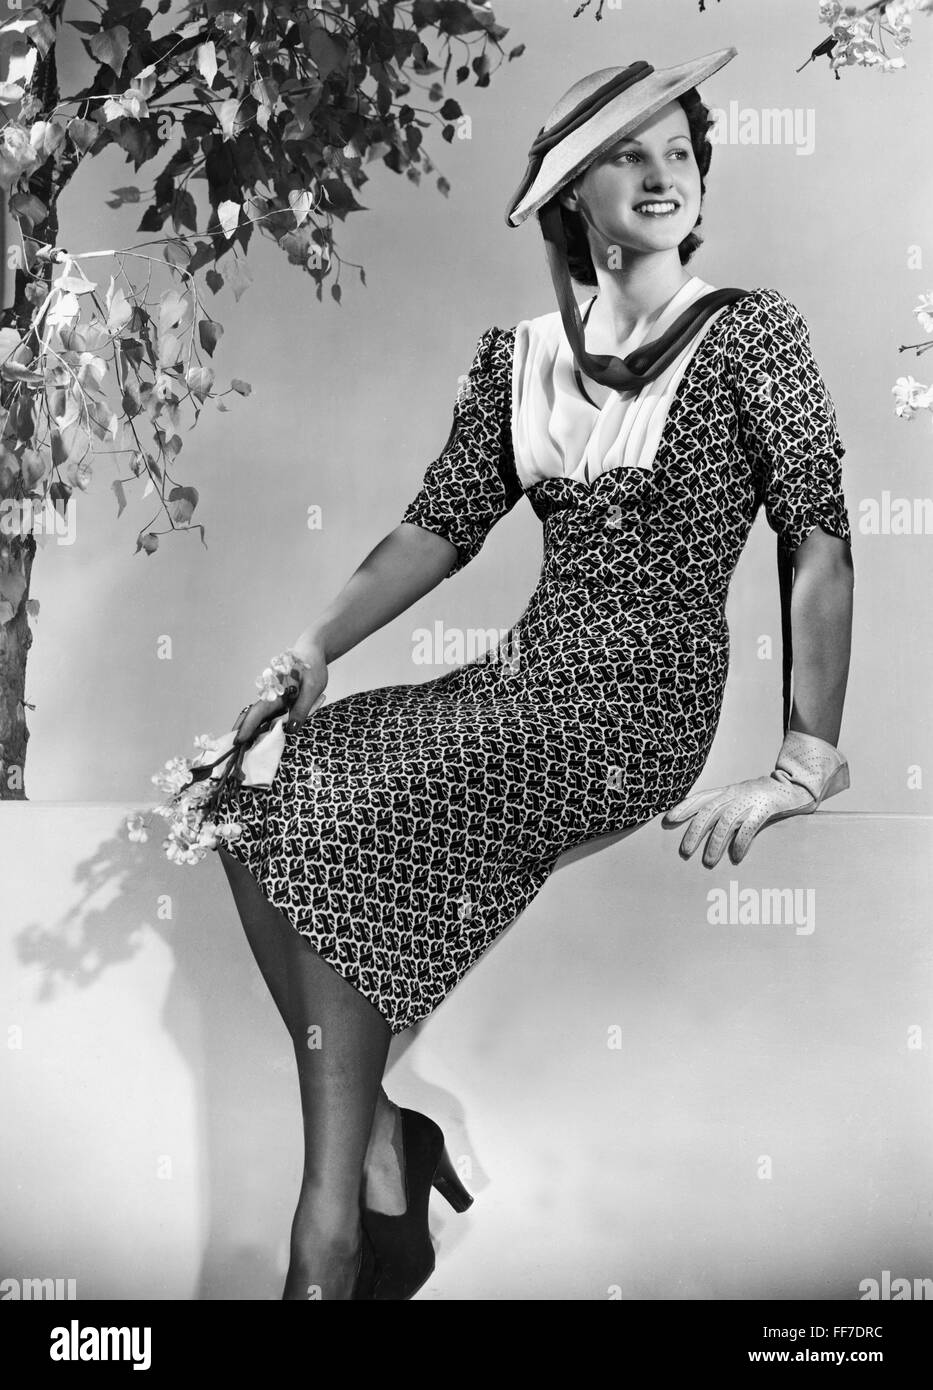 1940 style dress